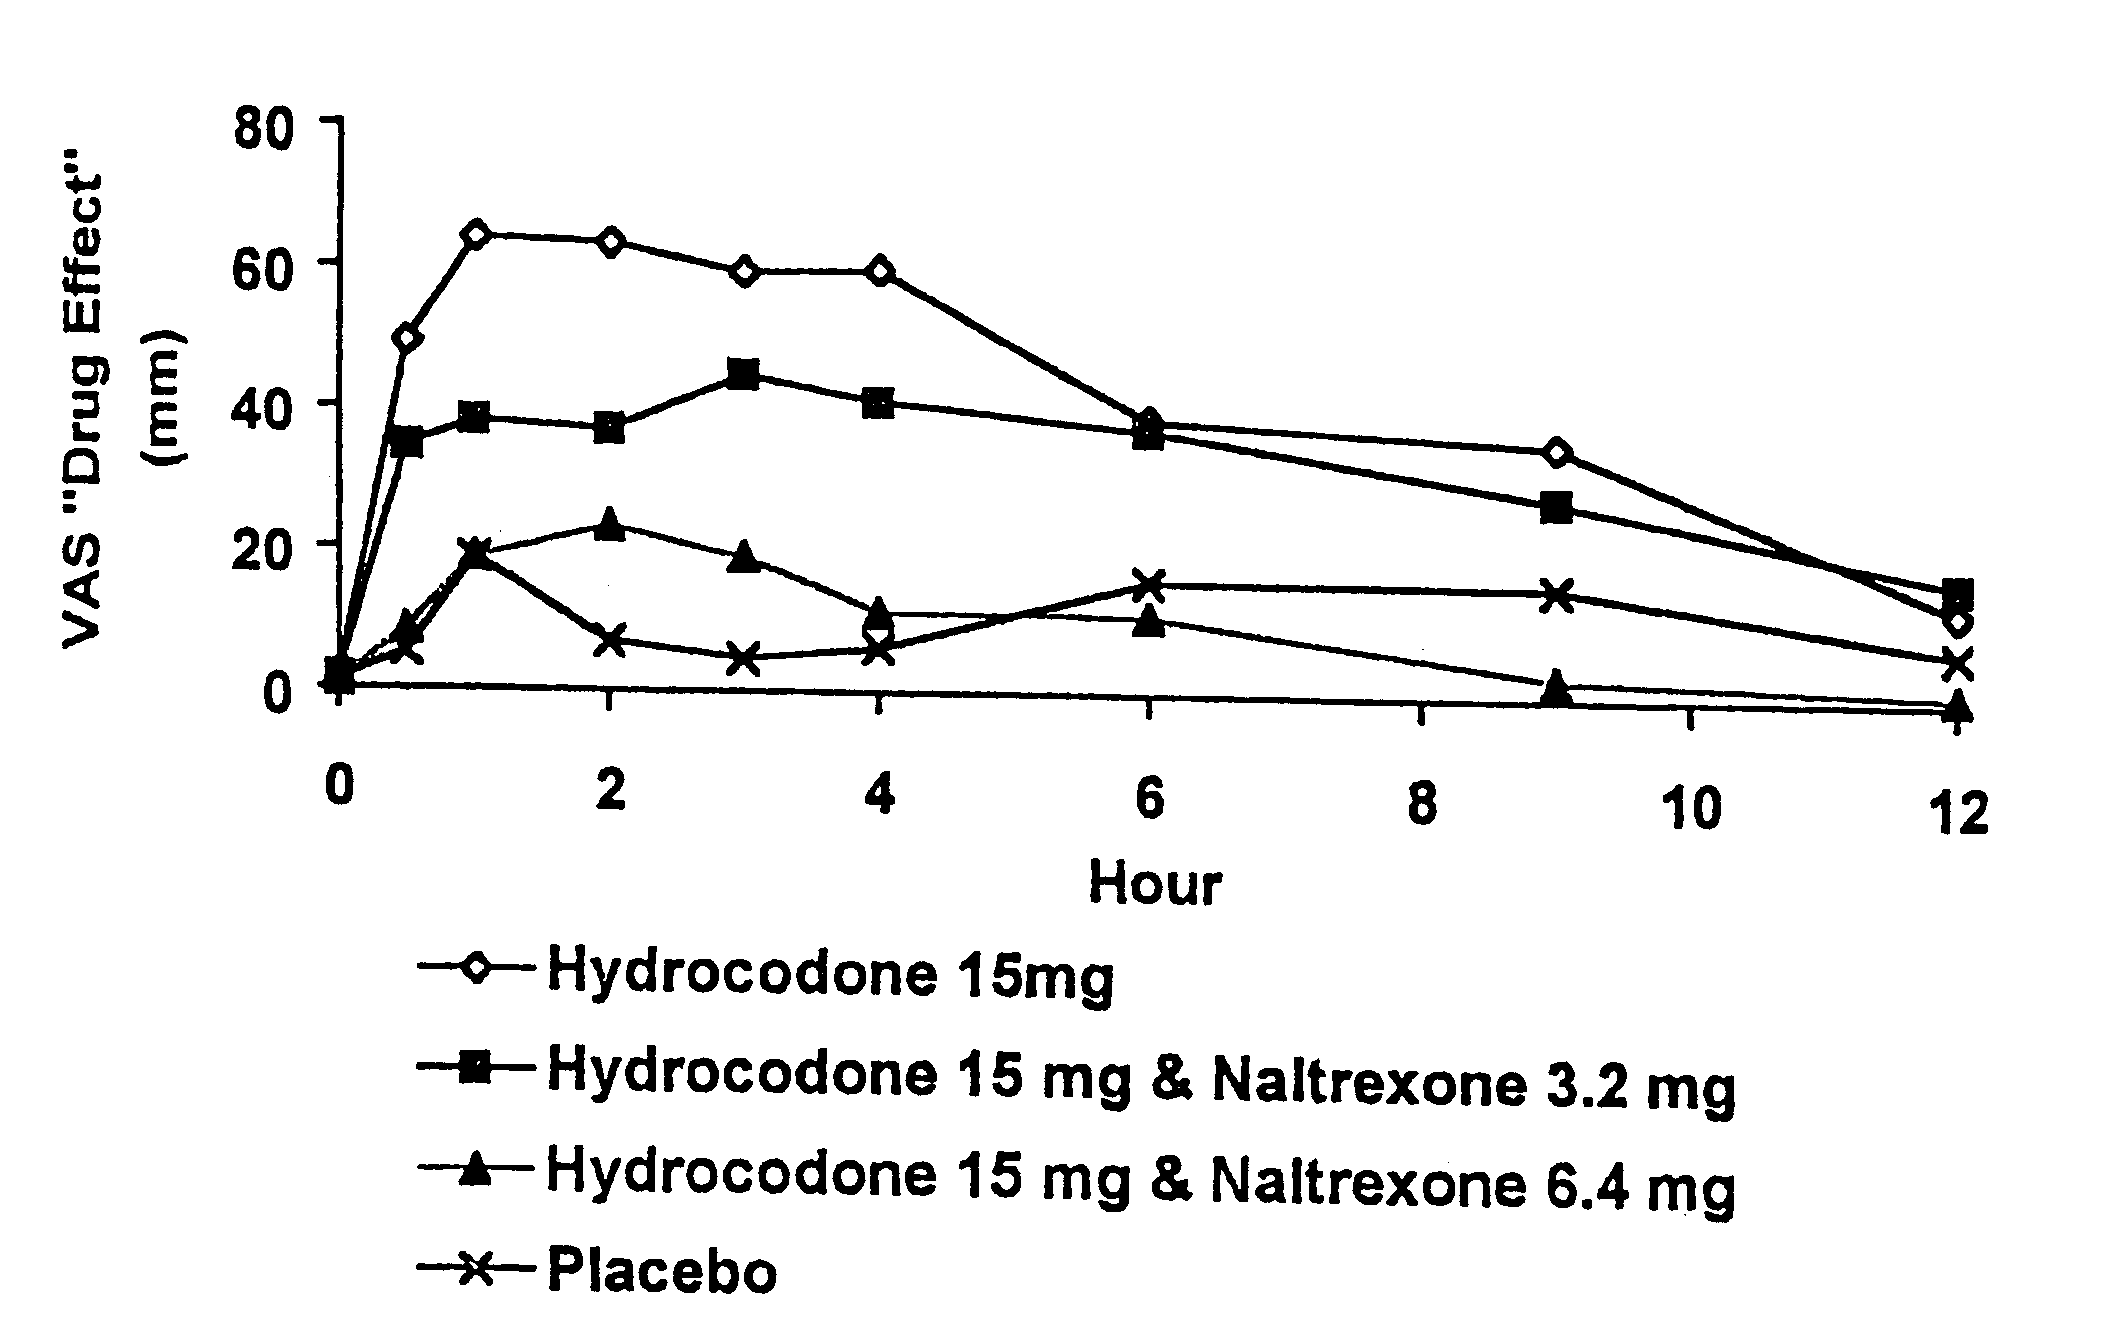 Opioid agonist/opioid antagonist/acetaminophen combinations